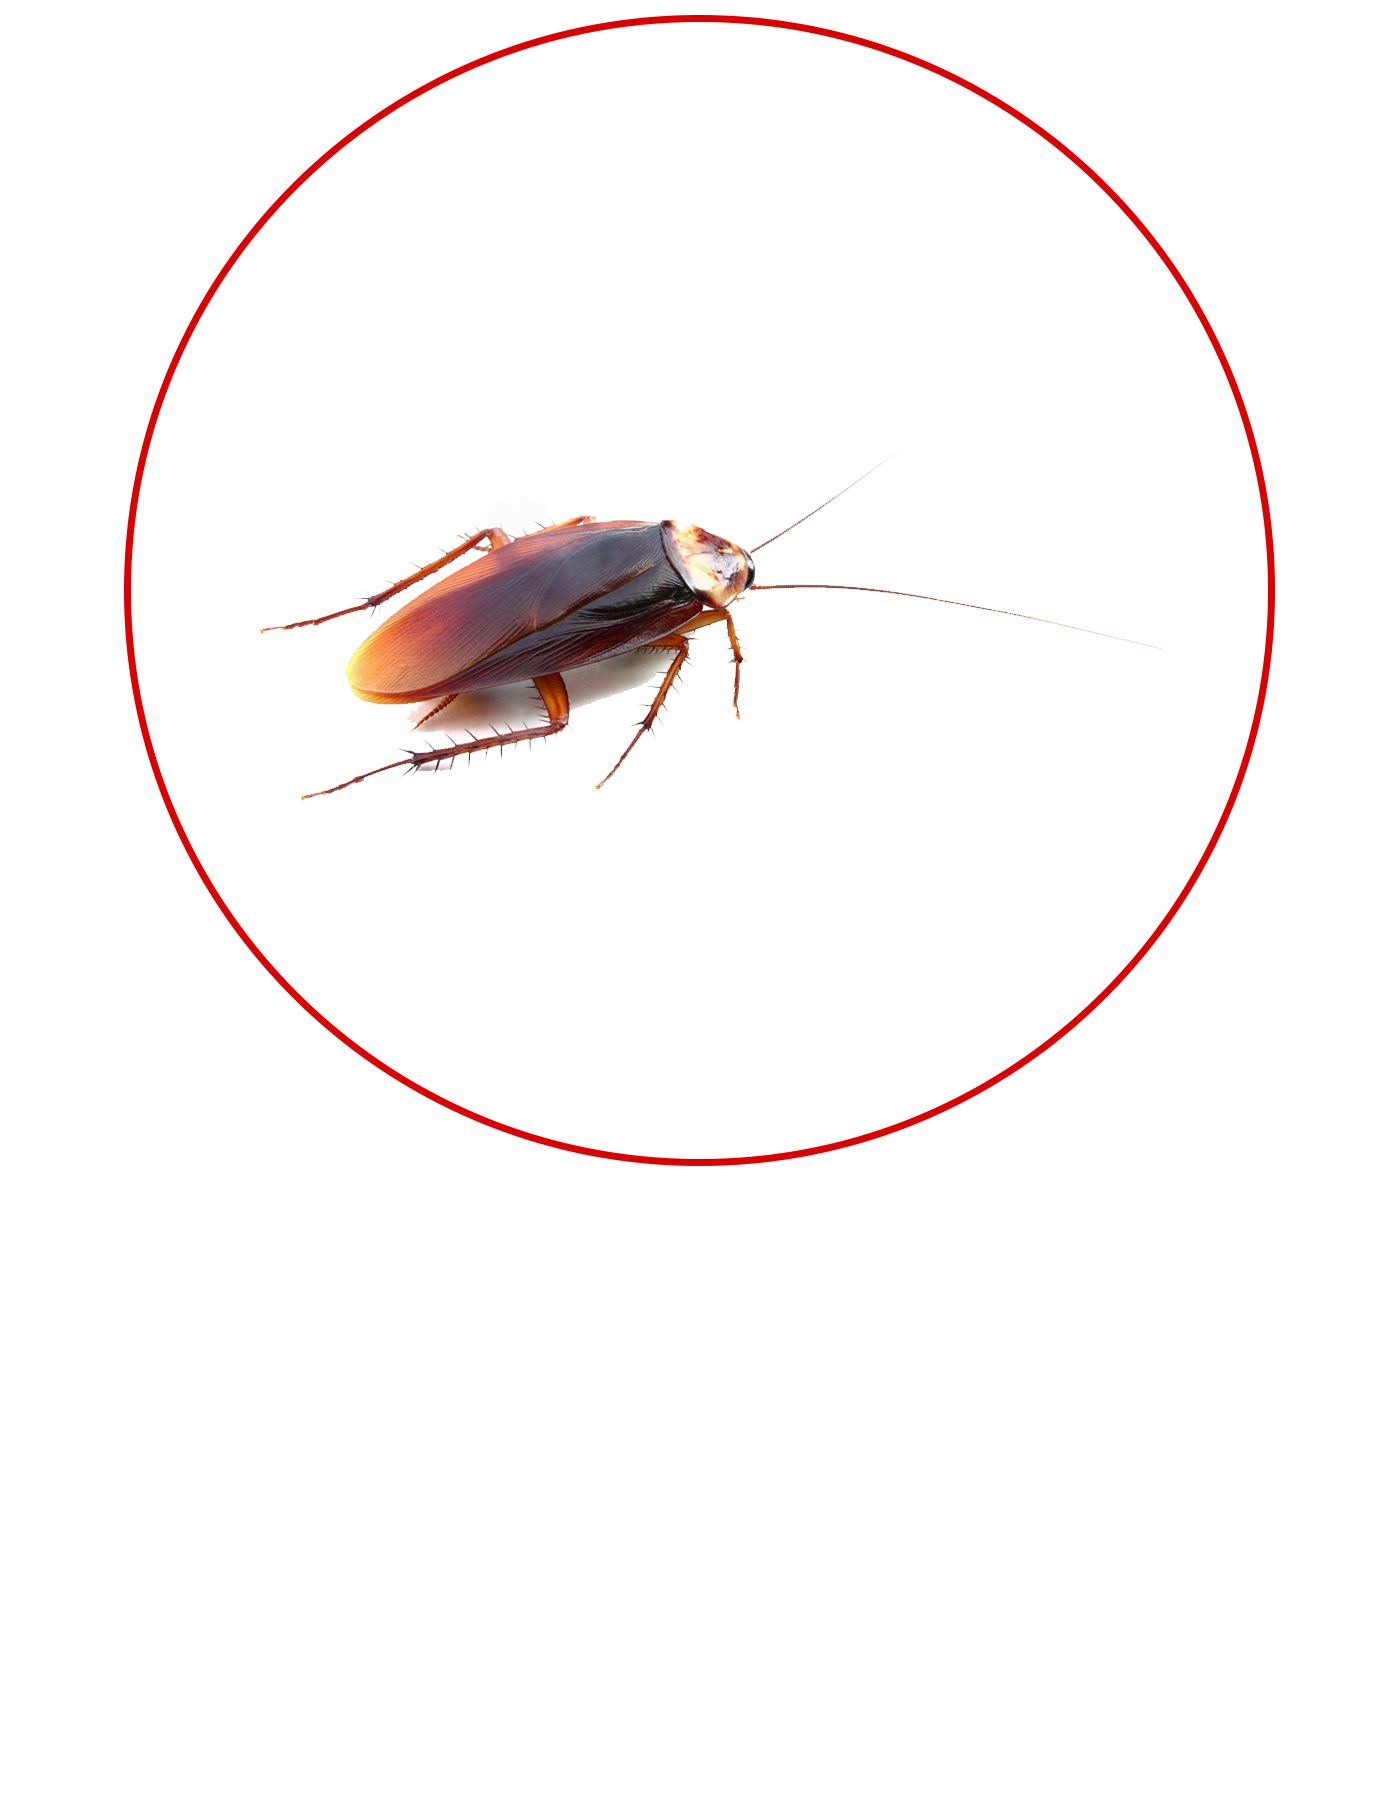 Pest Control Cockroaches